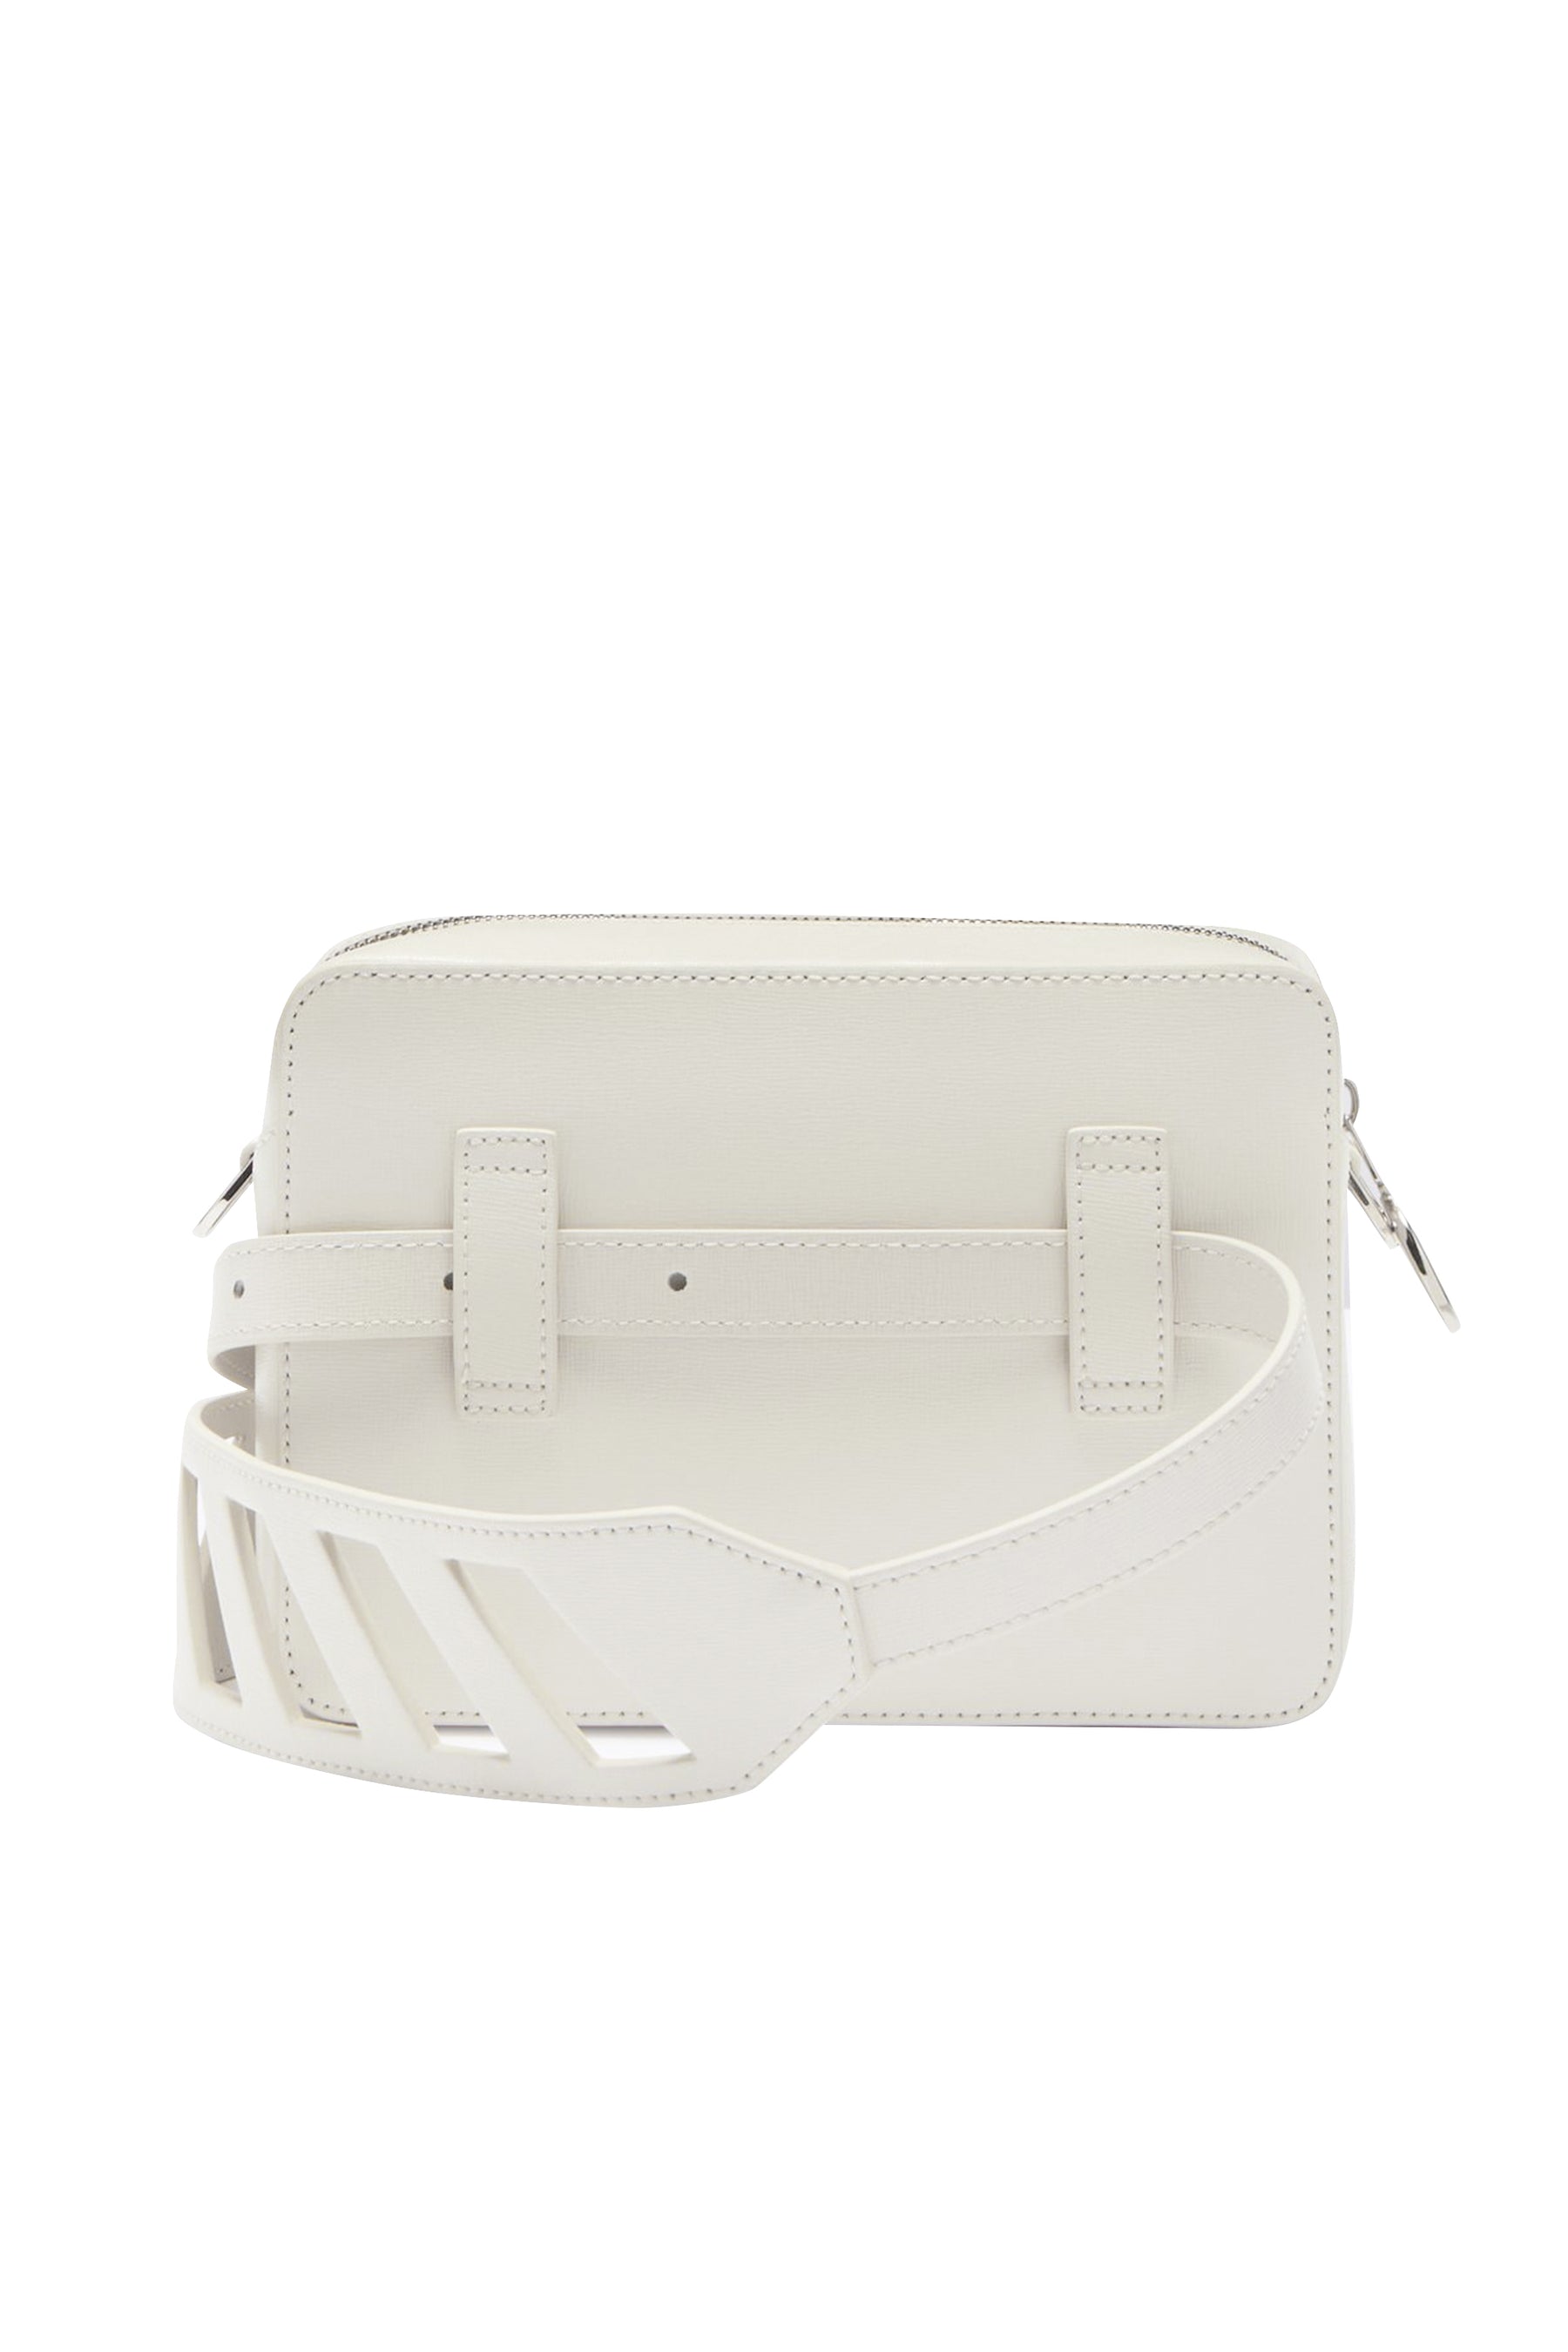 Off-White Diag Leather Camera Bag